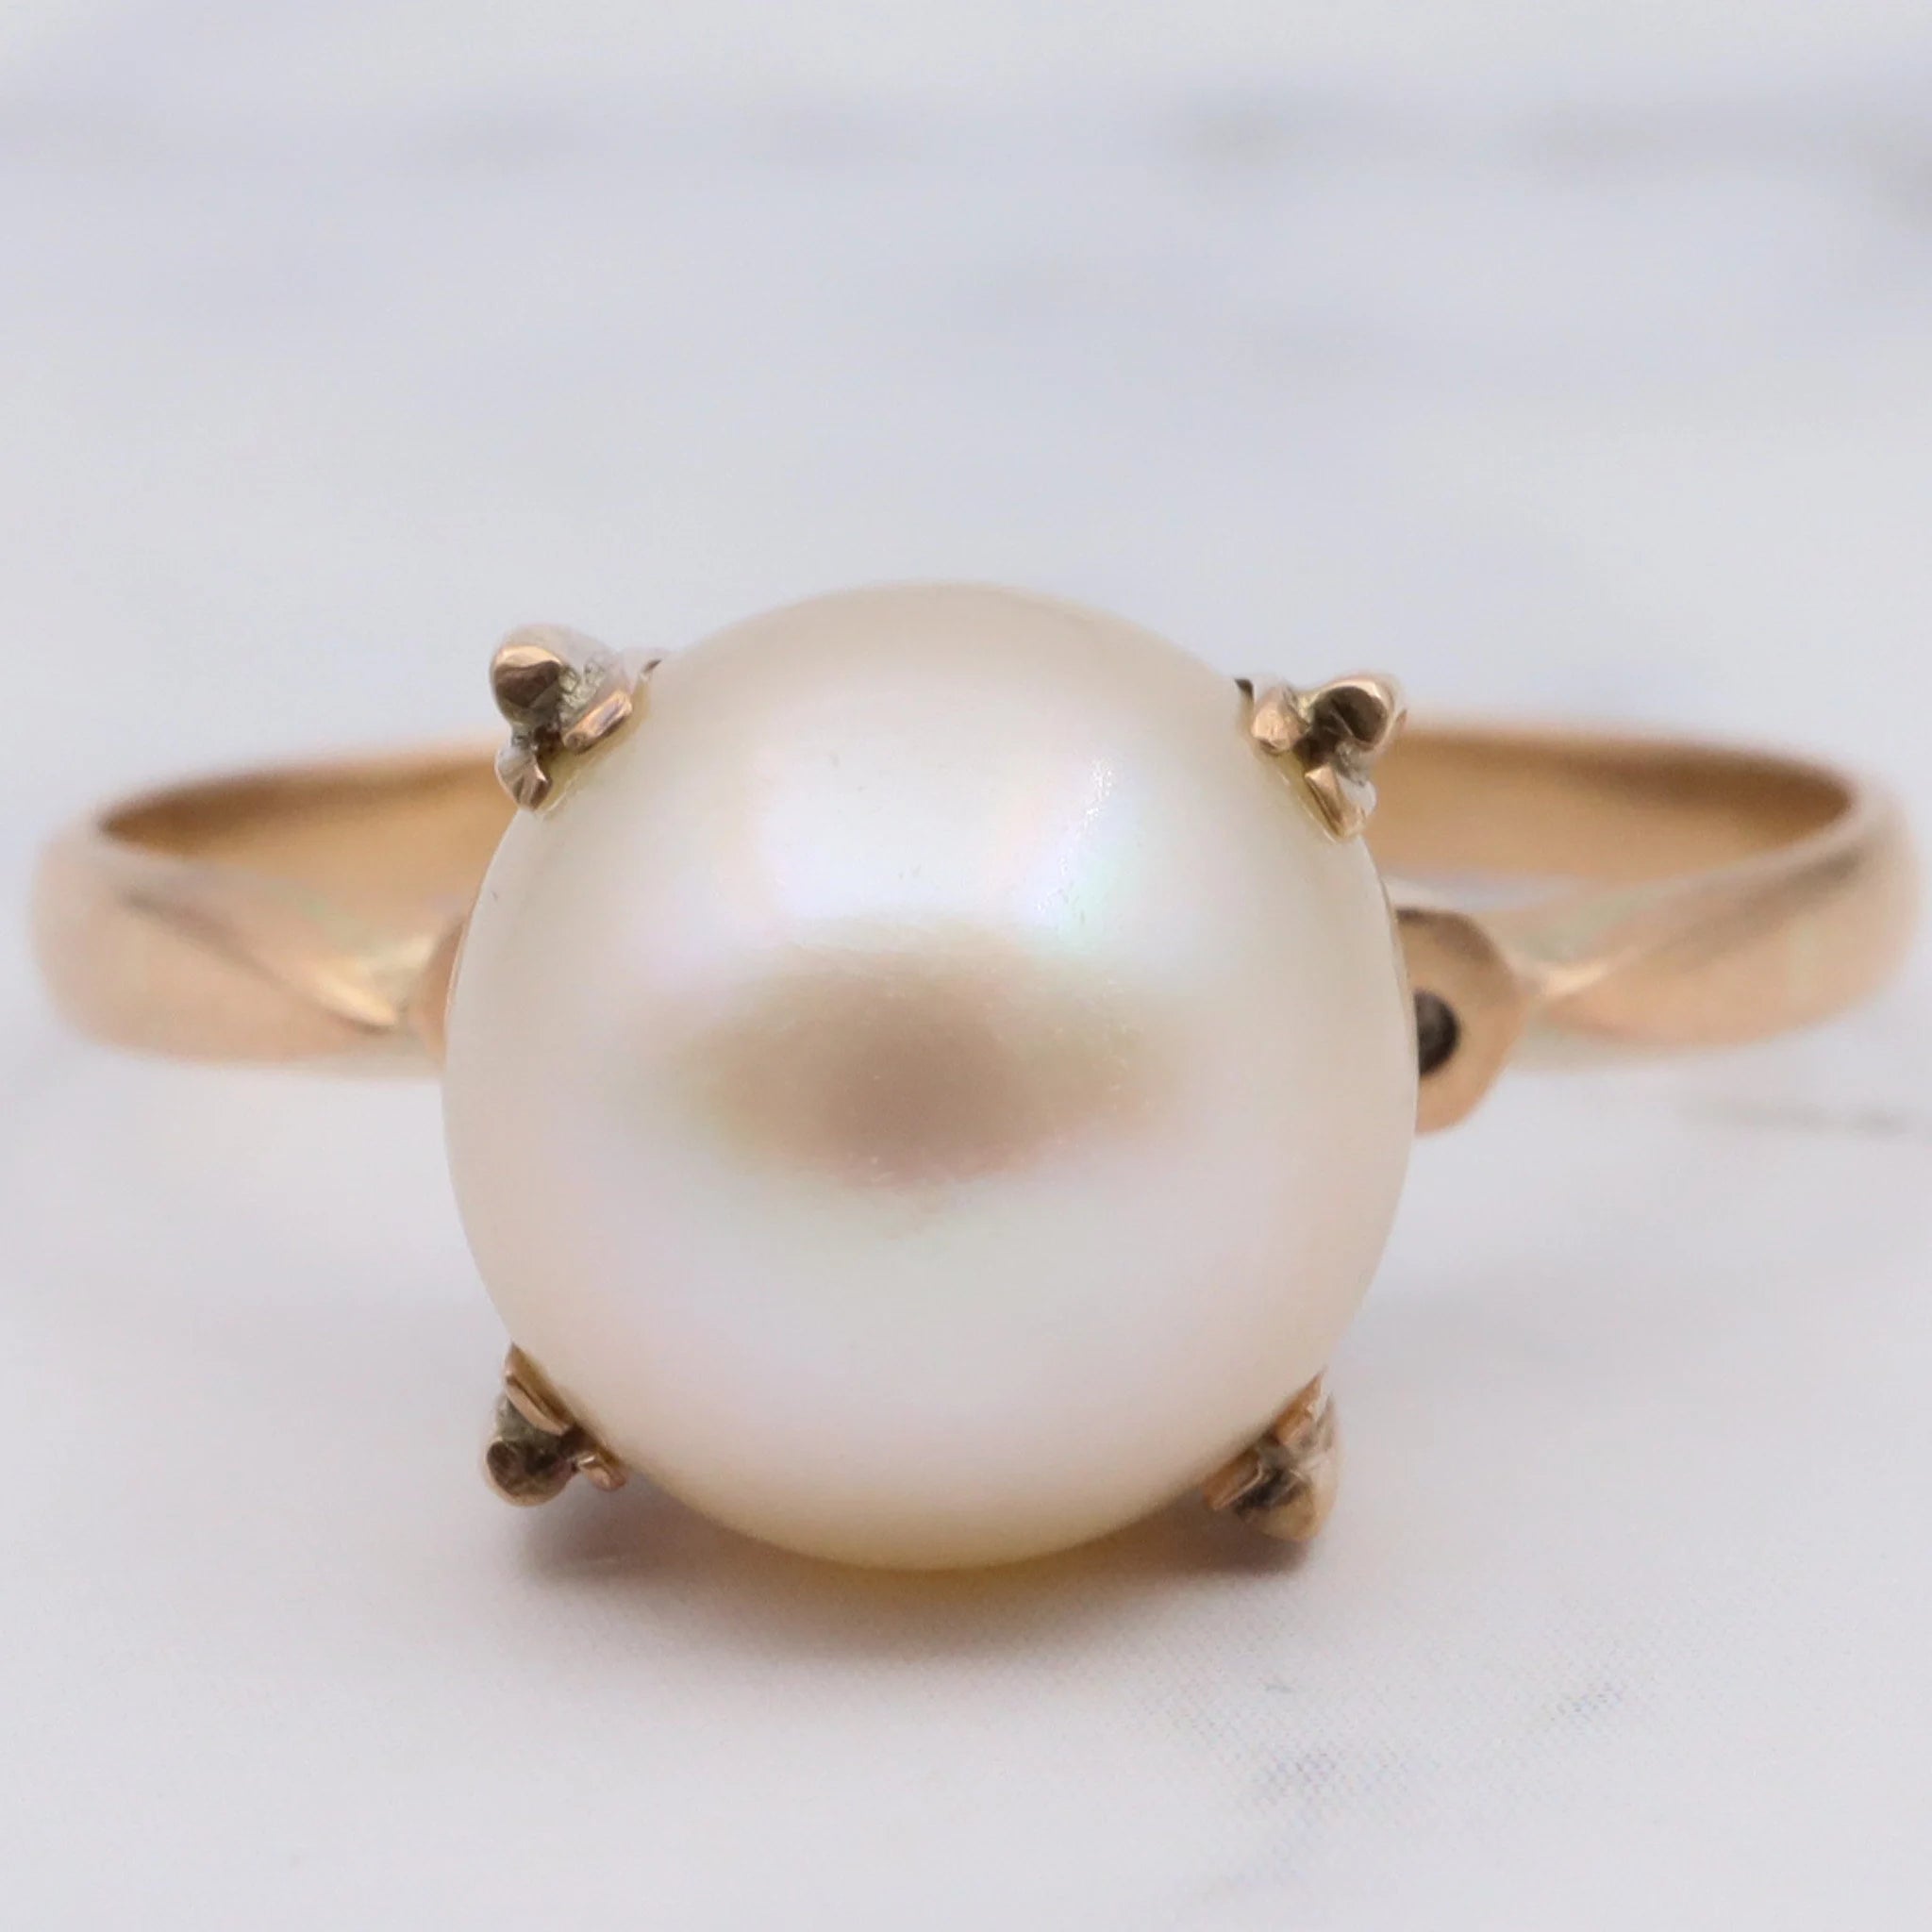 Vintage Art Deco Japanese 14K Gold Pearl Ring - Size 7.25